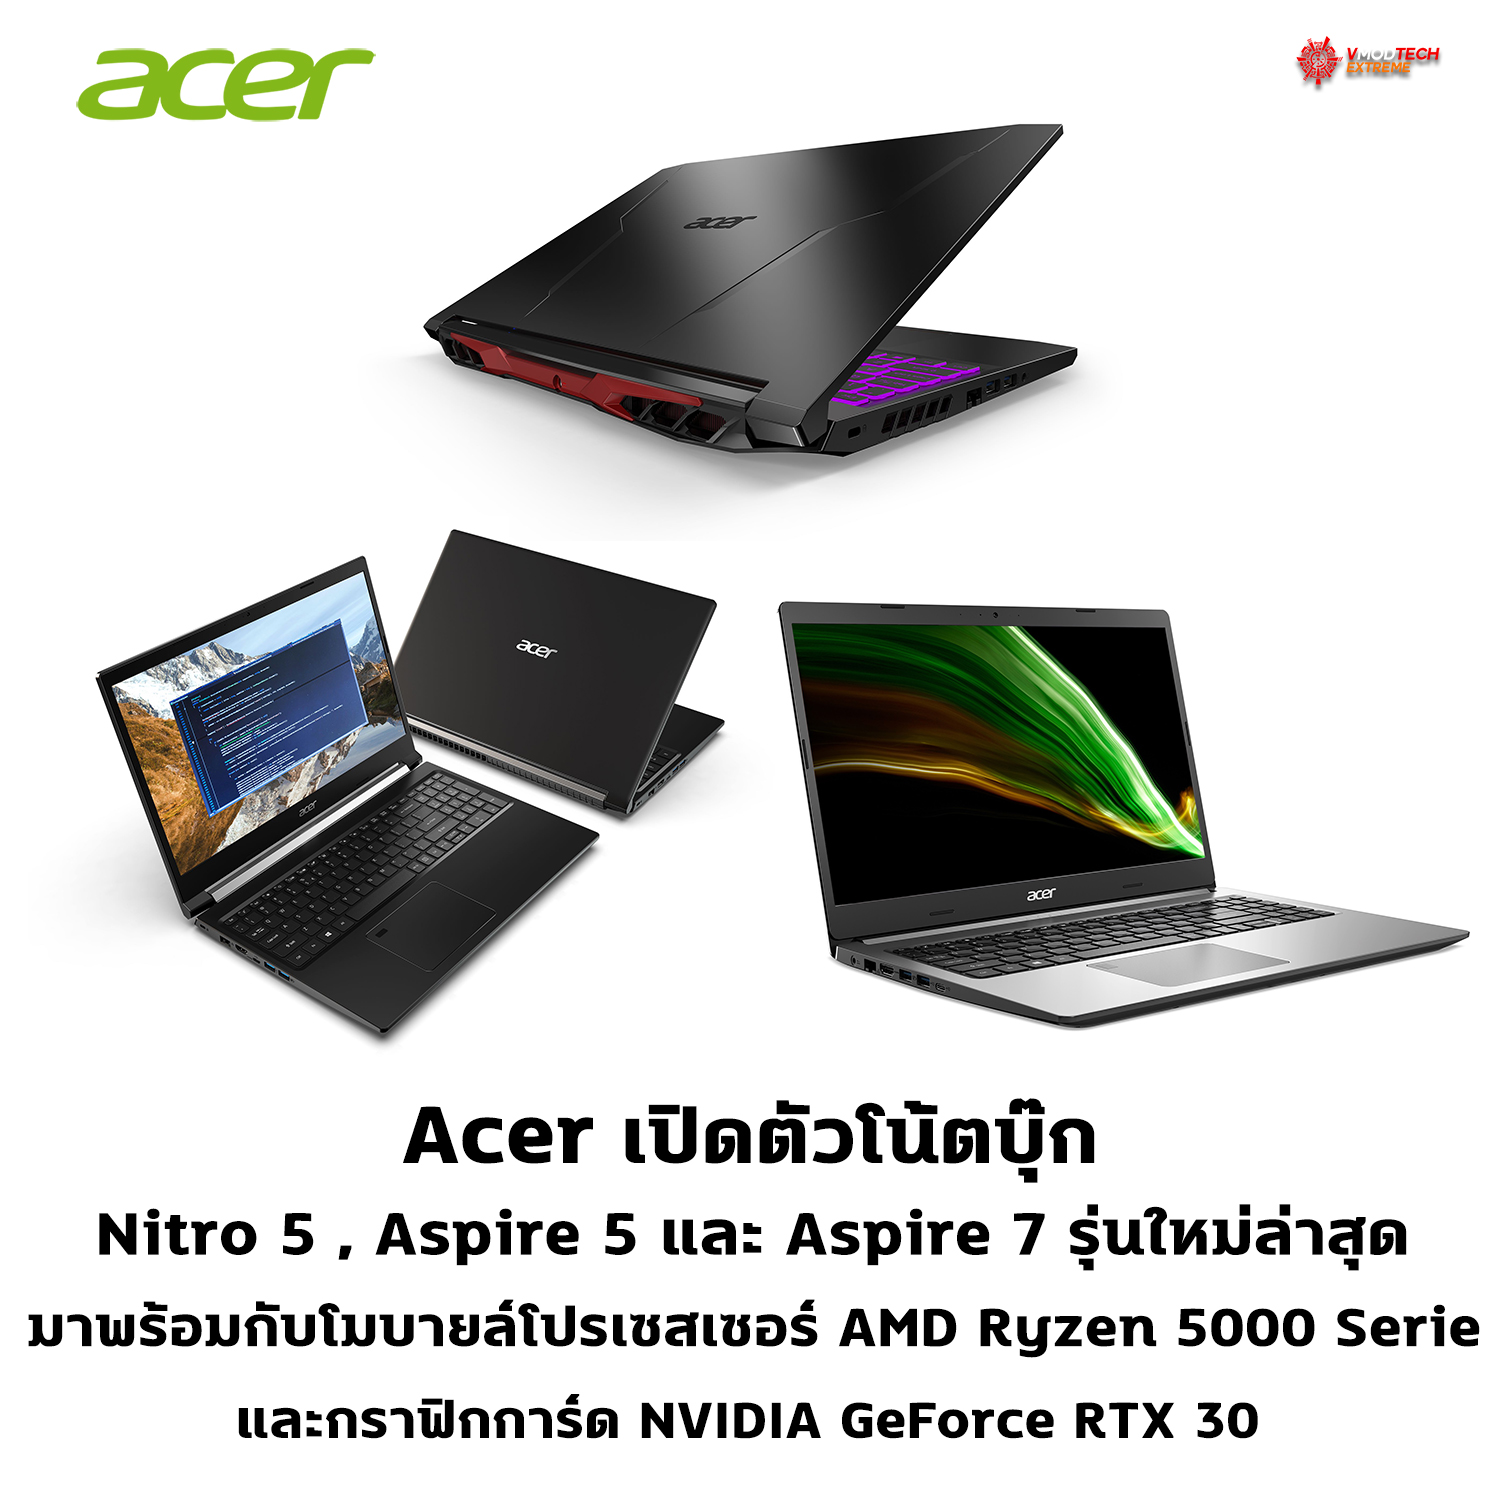 acer nitro 5 aspire 5 7 ryzen 5000 rtx 302 Acer เปิดตัวโน้ตบุ๊ก Nitro และ Aspire รุ่นล่าสุด มาพร้อมกับโมบายล์โปรเซสเซอร์ AMD Ryzen 5000 Serie และกราฟิกการ์ด NVIDIA GeForce RTX 30 